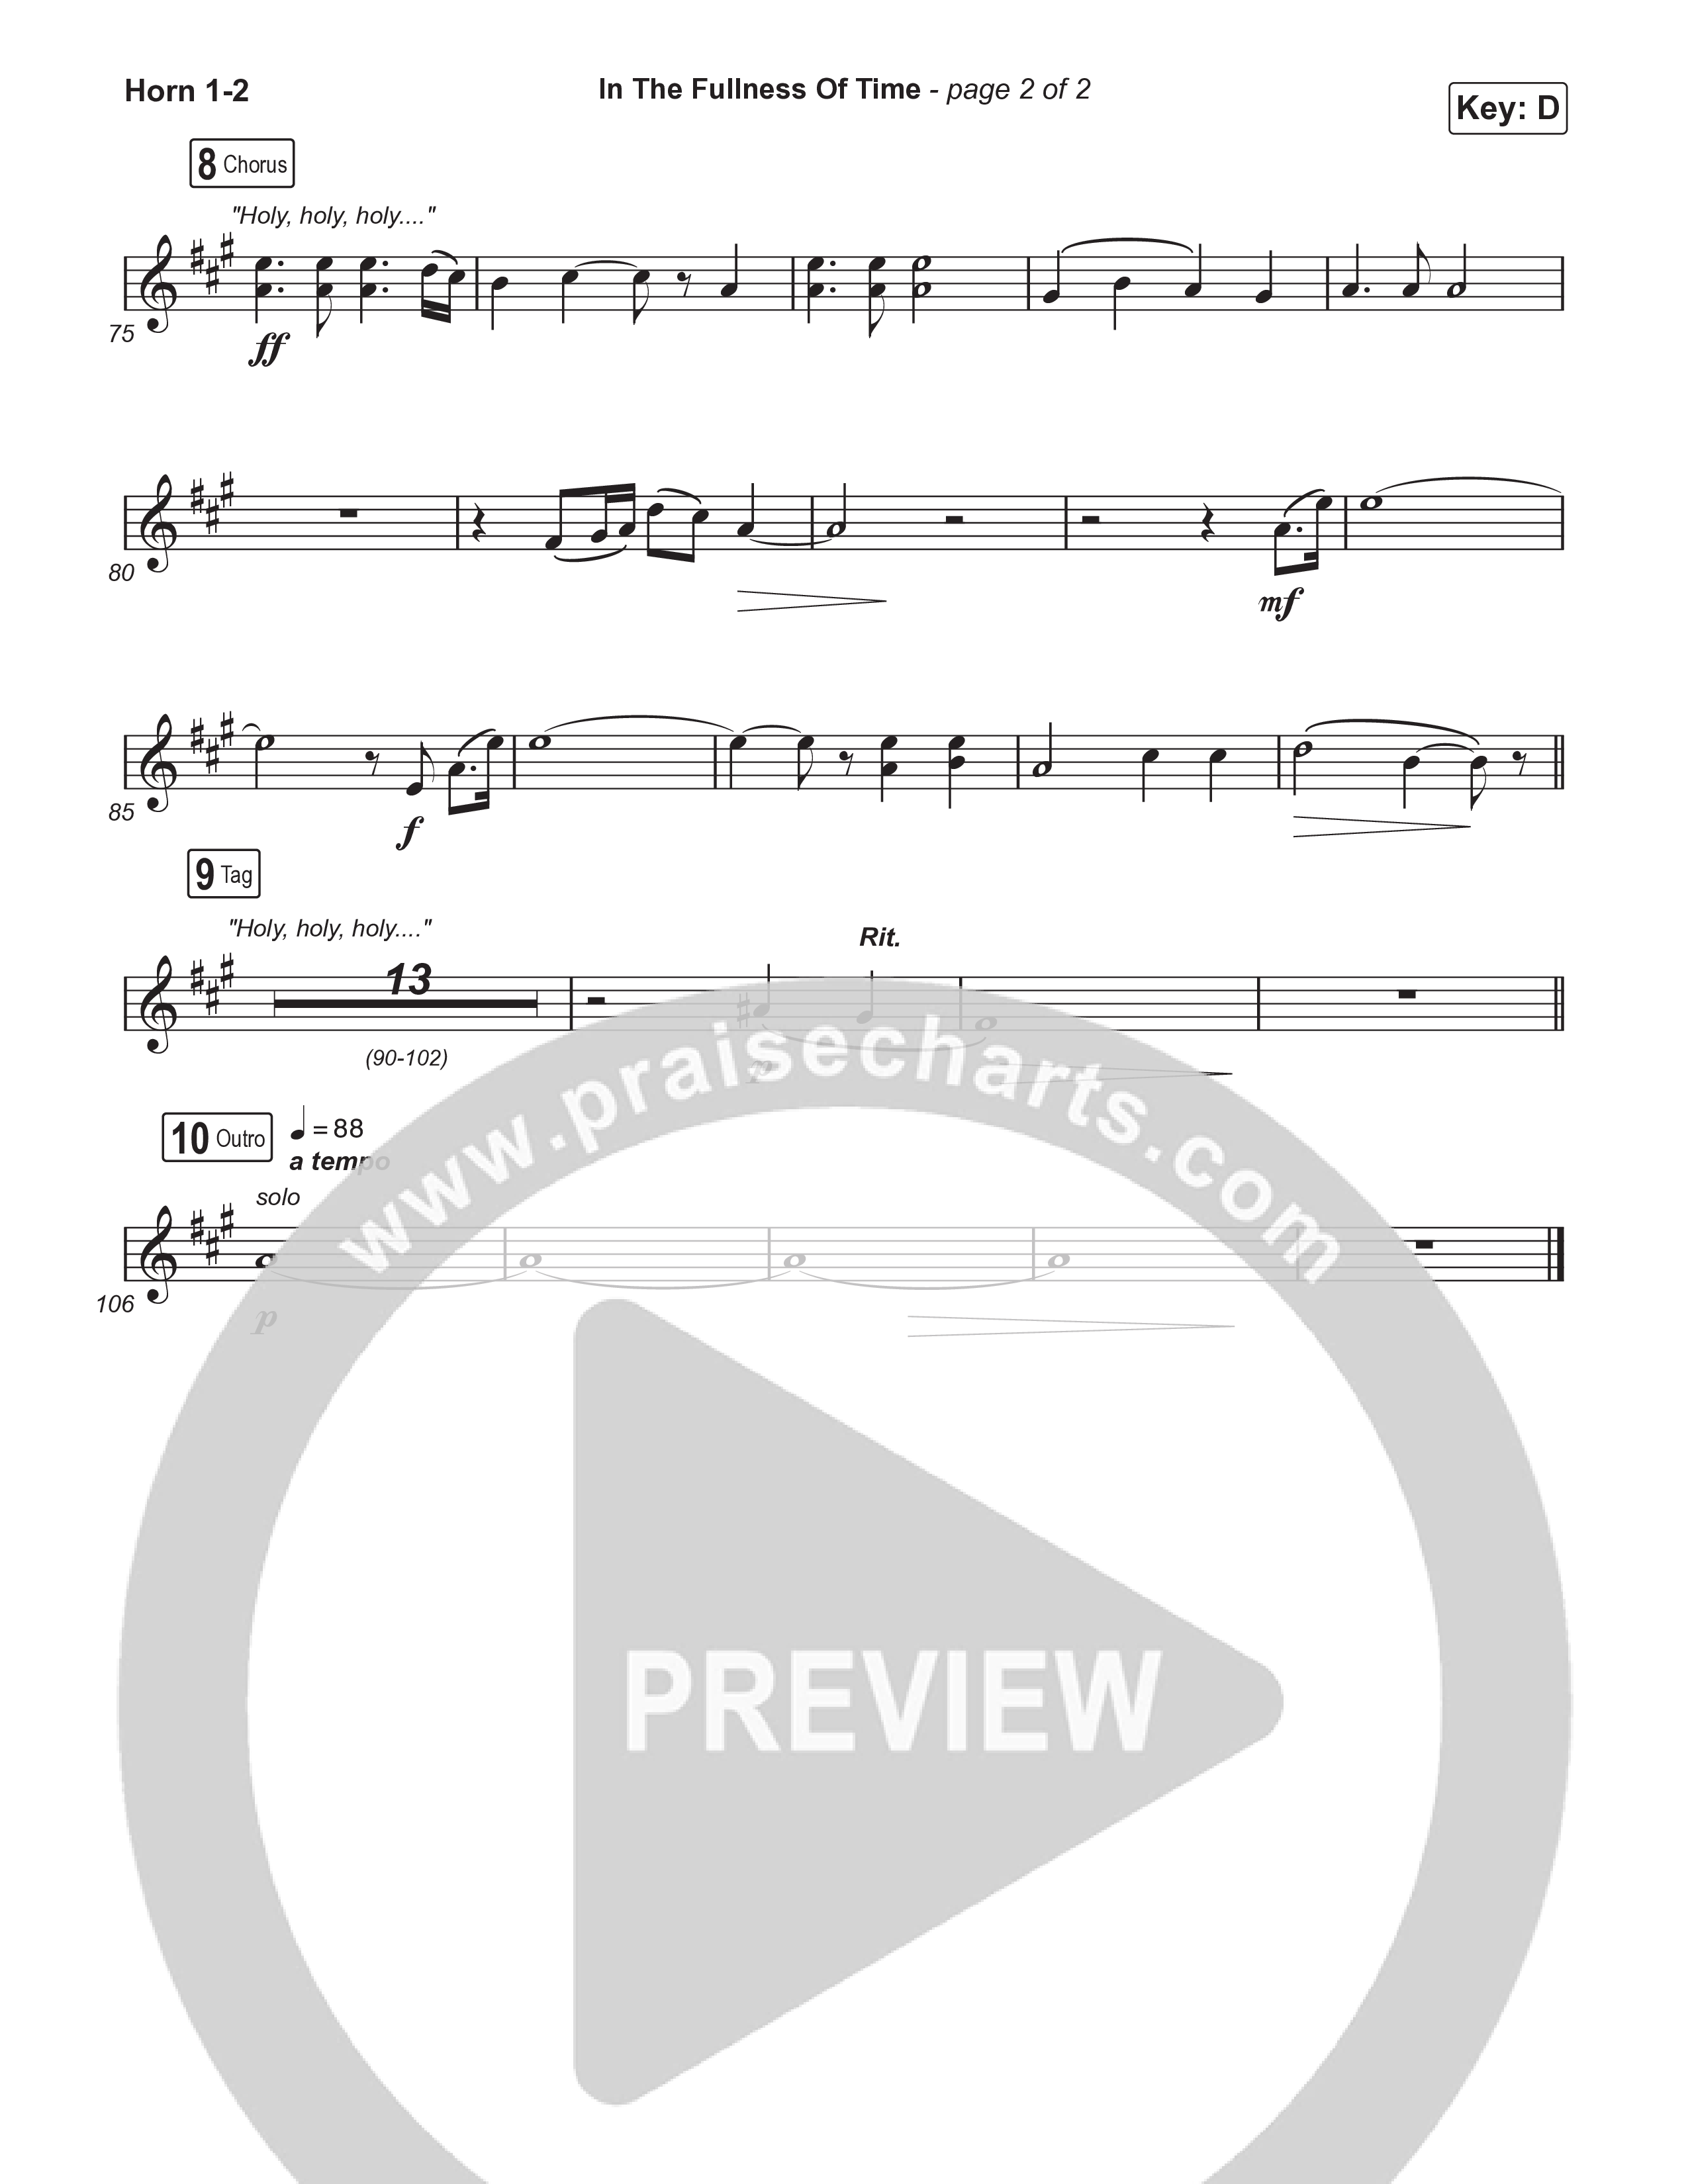 In The Fullness Of Time (Choral Anthem SATB) Brass Pack (Matt Papa / Matt Boswell / Arr. Luke Gambill)